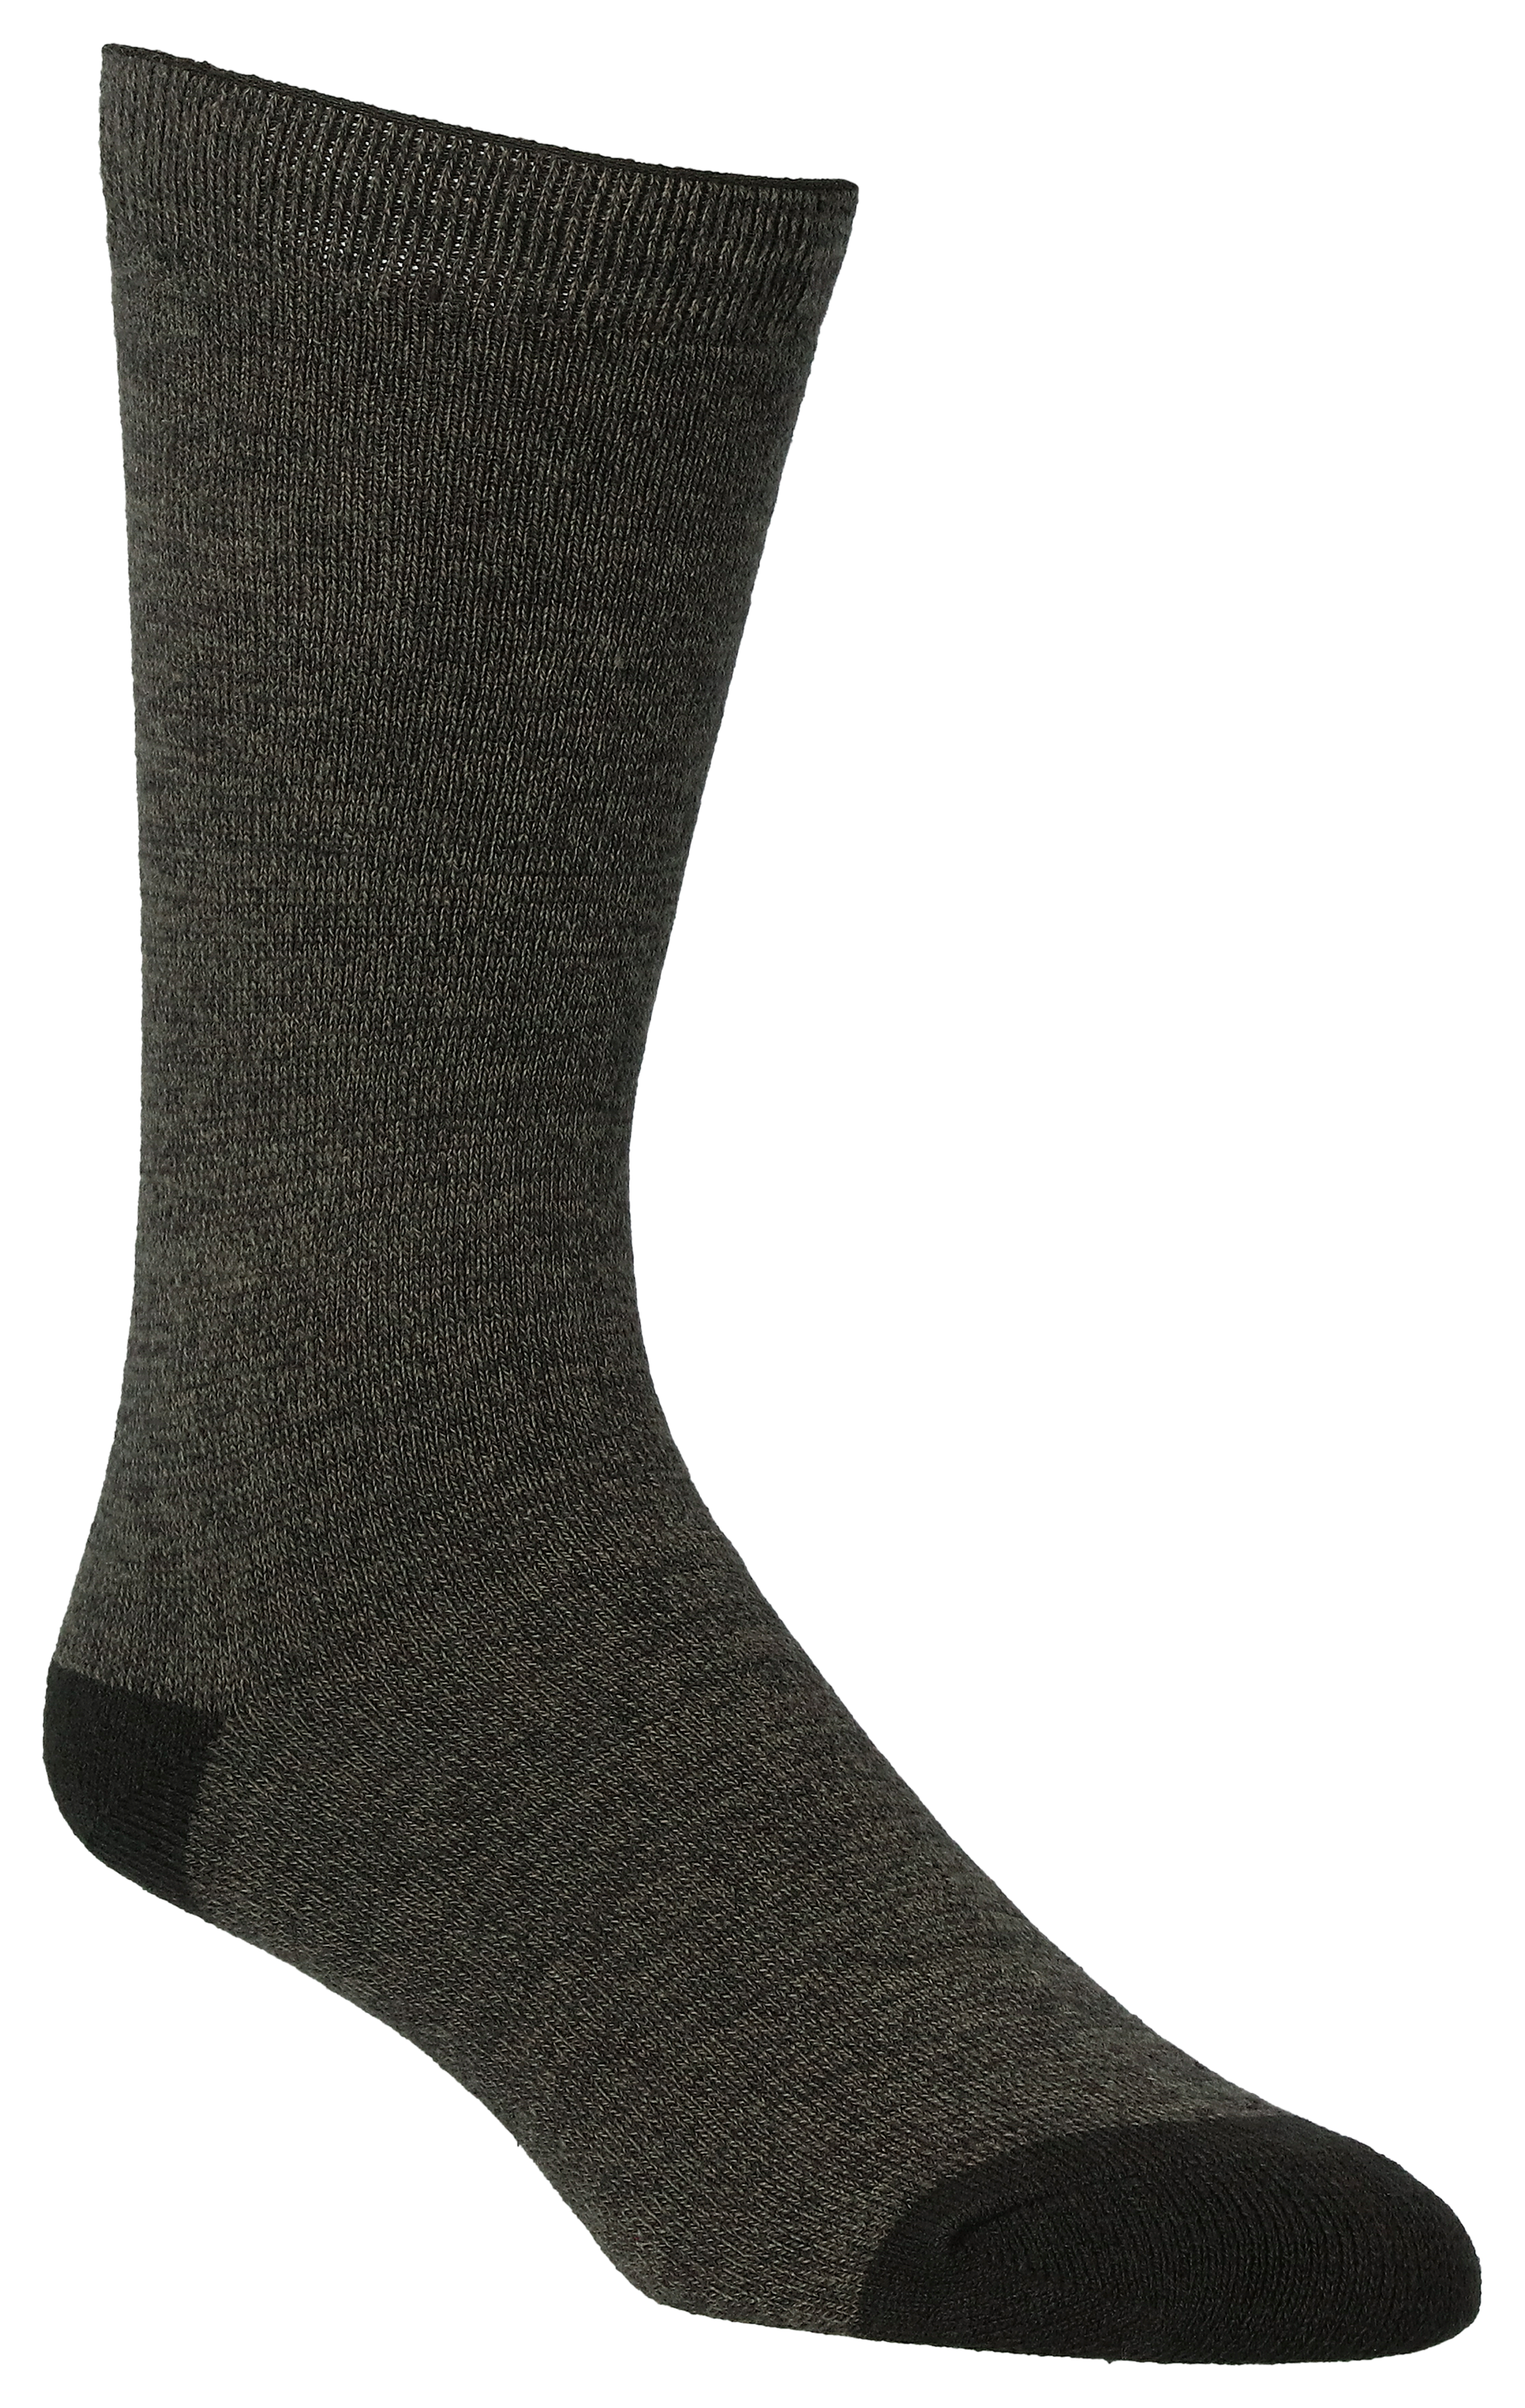 Heat Holders Twist ULTRA LITE Thermal Crew Socks for Men | Cabela's